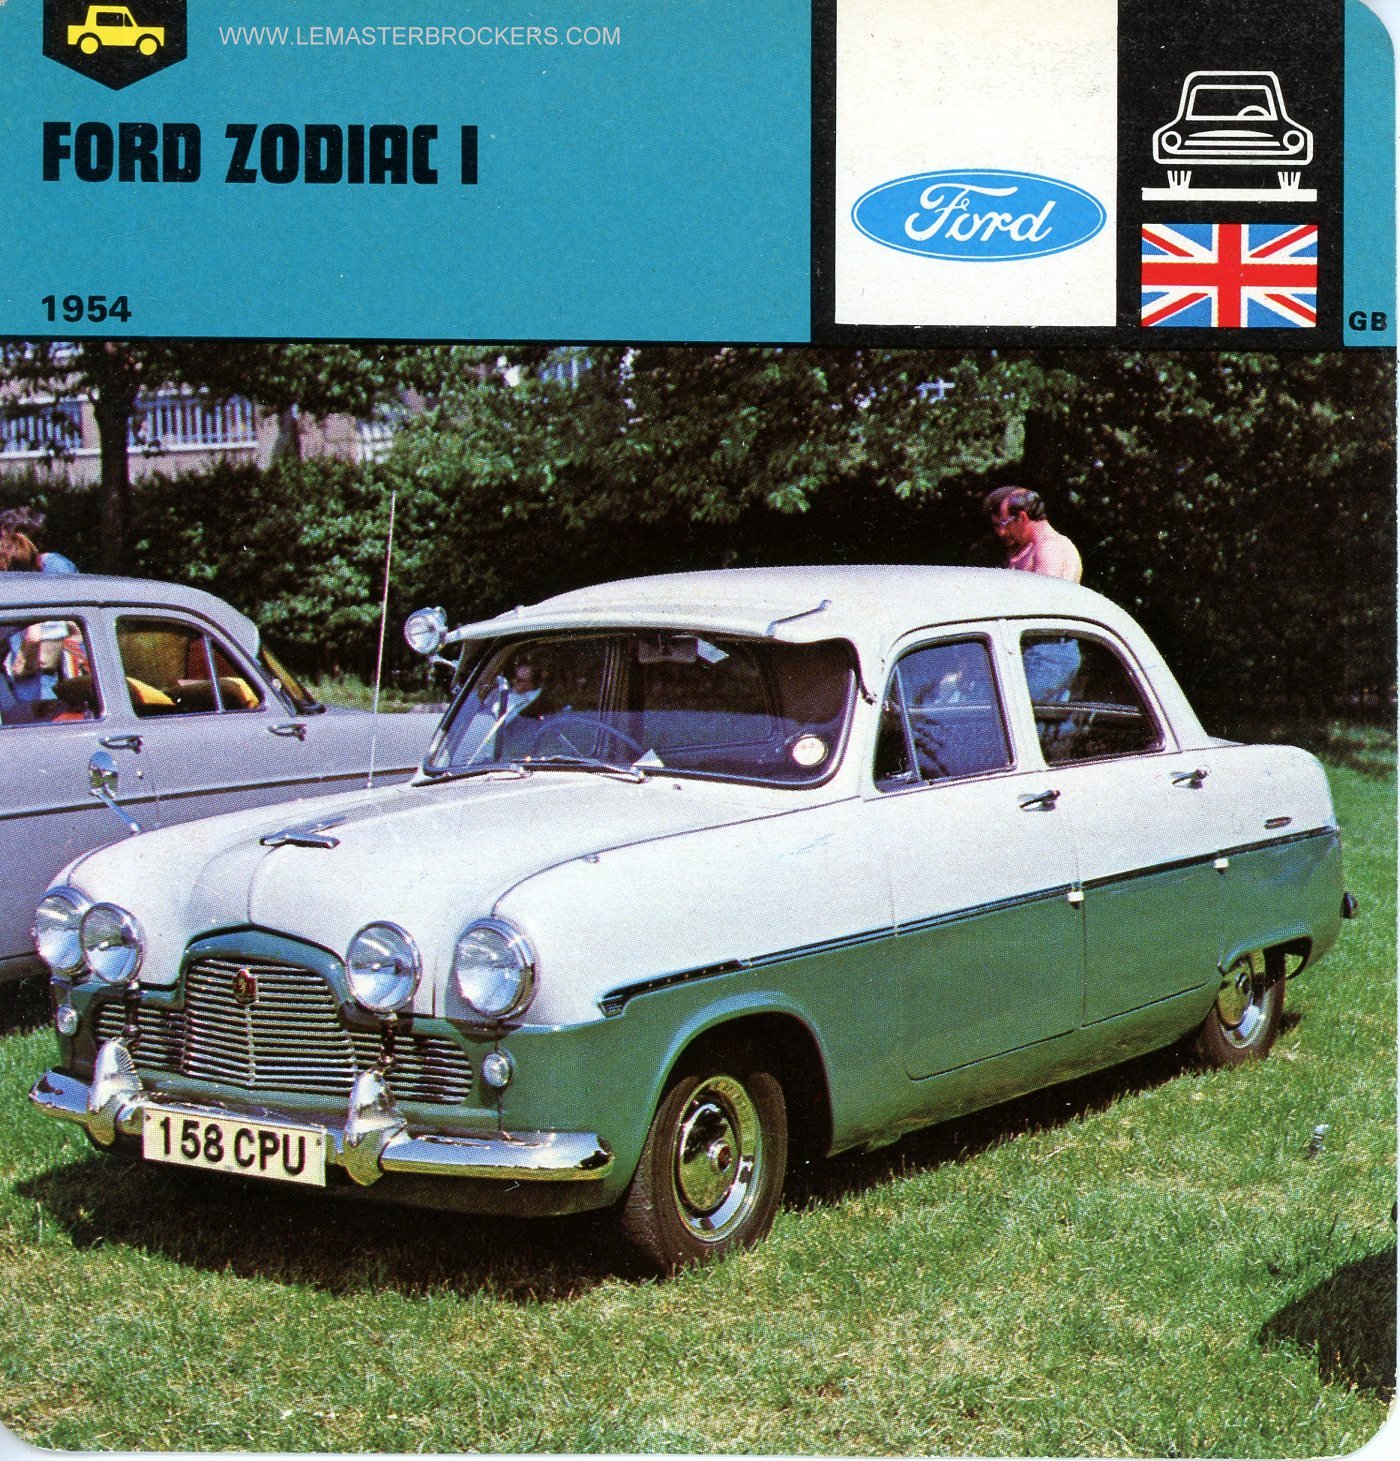 FORD ZODIAC I 1954 - FICHE AUTO-PHOTO